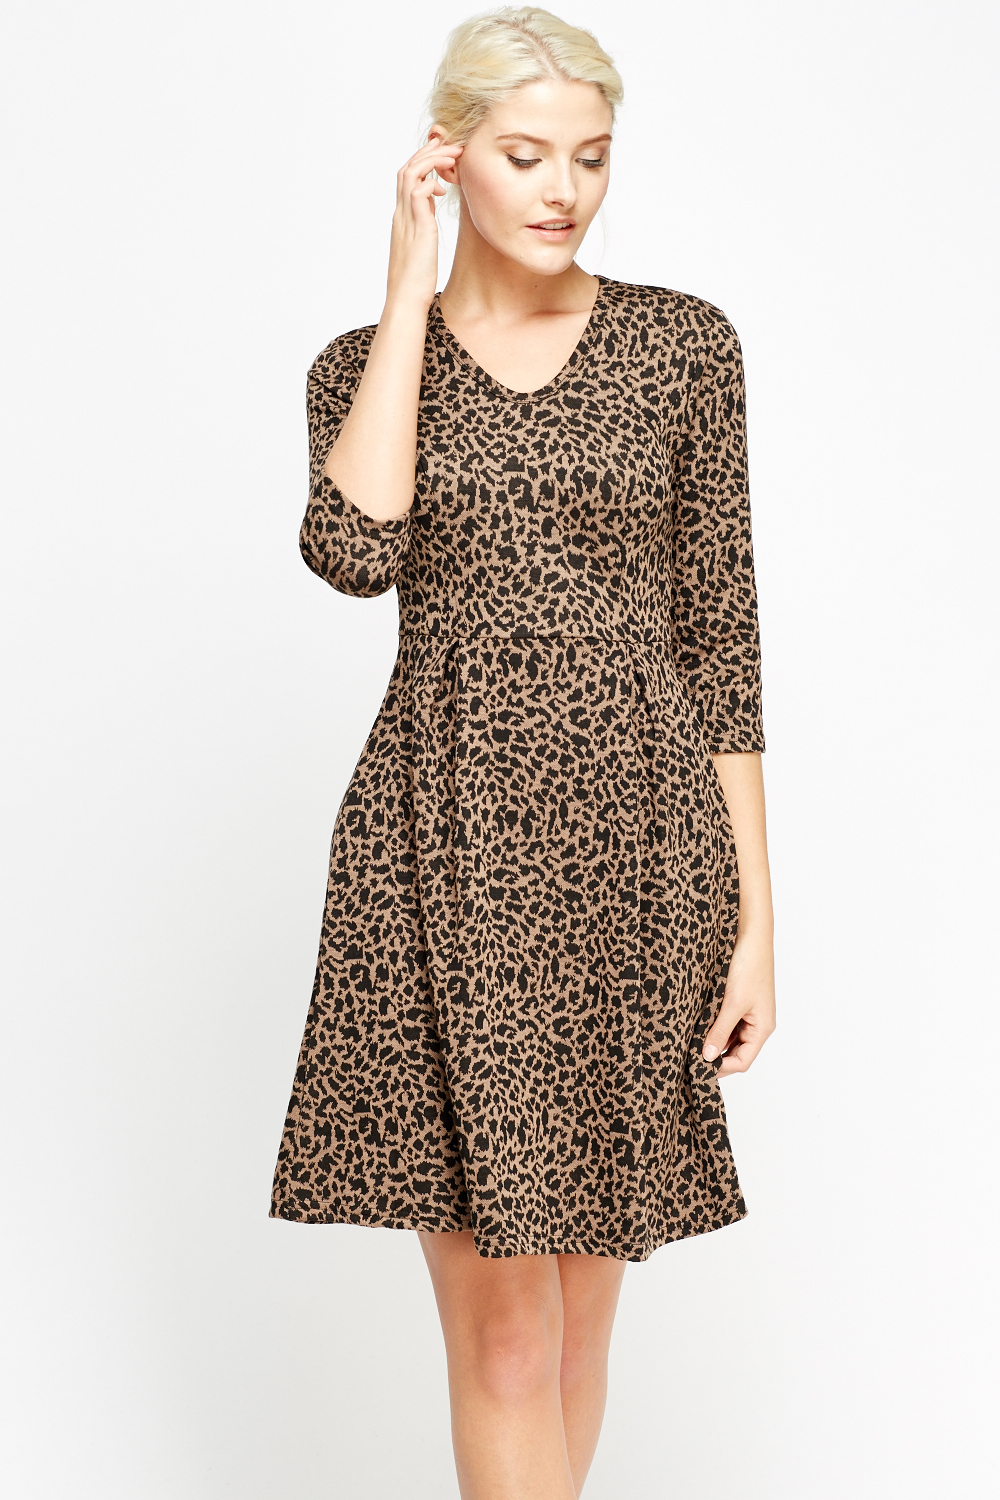 Leopard Print Skater Dress Just 7